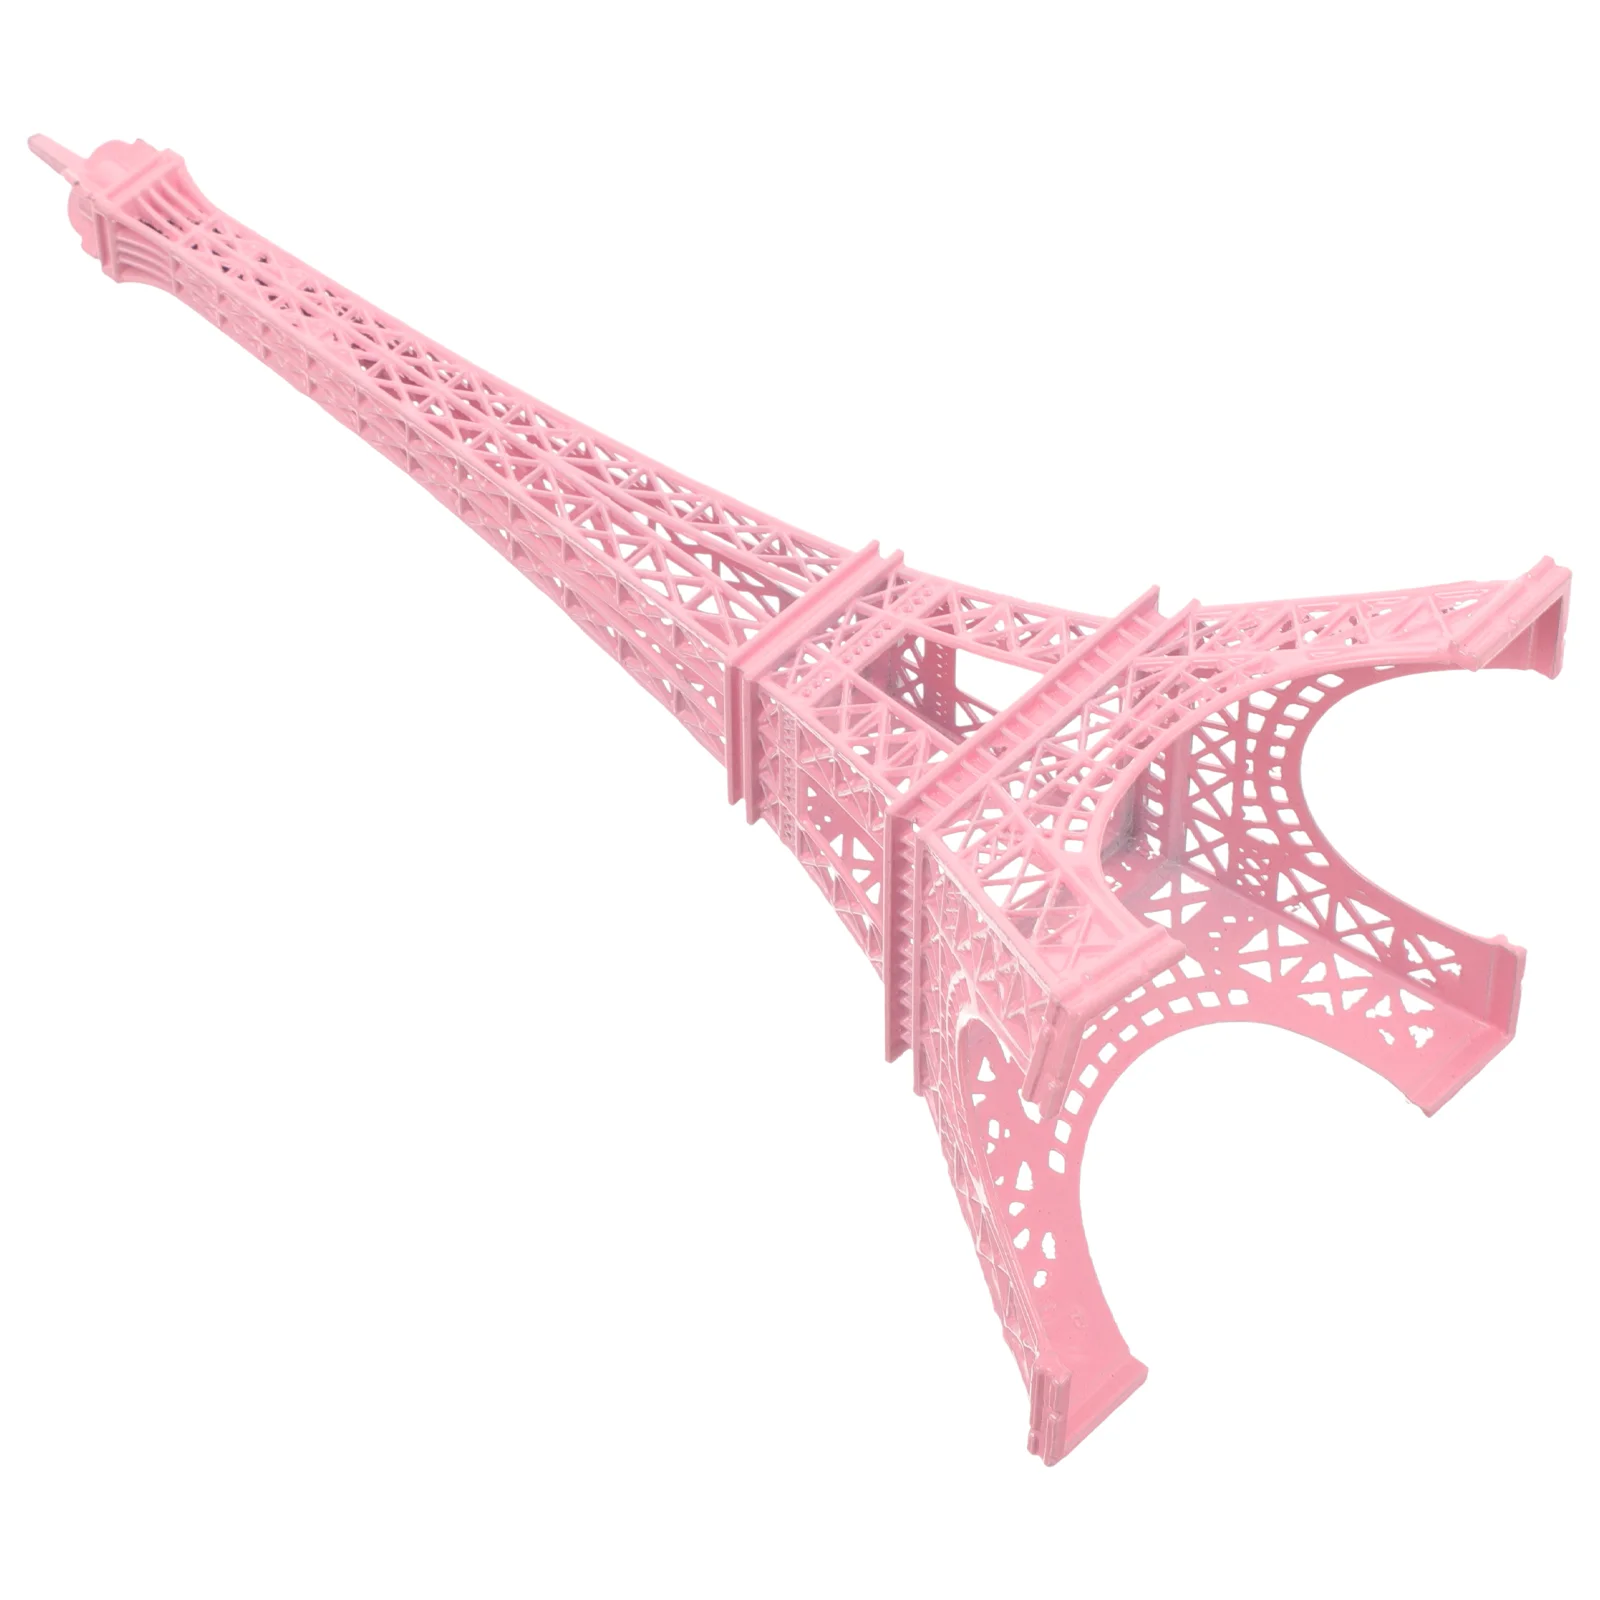 

Eiffel Tower Sculpture Figurine Office Decor Desktop Metal Photo Props Craft Decorative Travel Souvenirs Gift Home